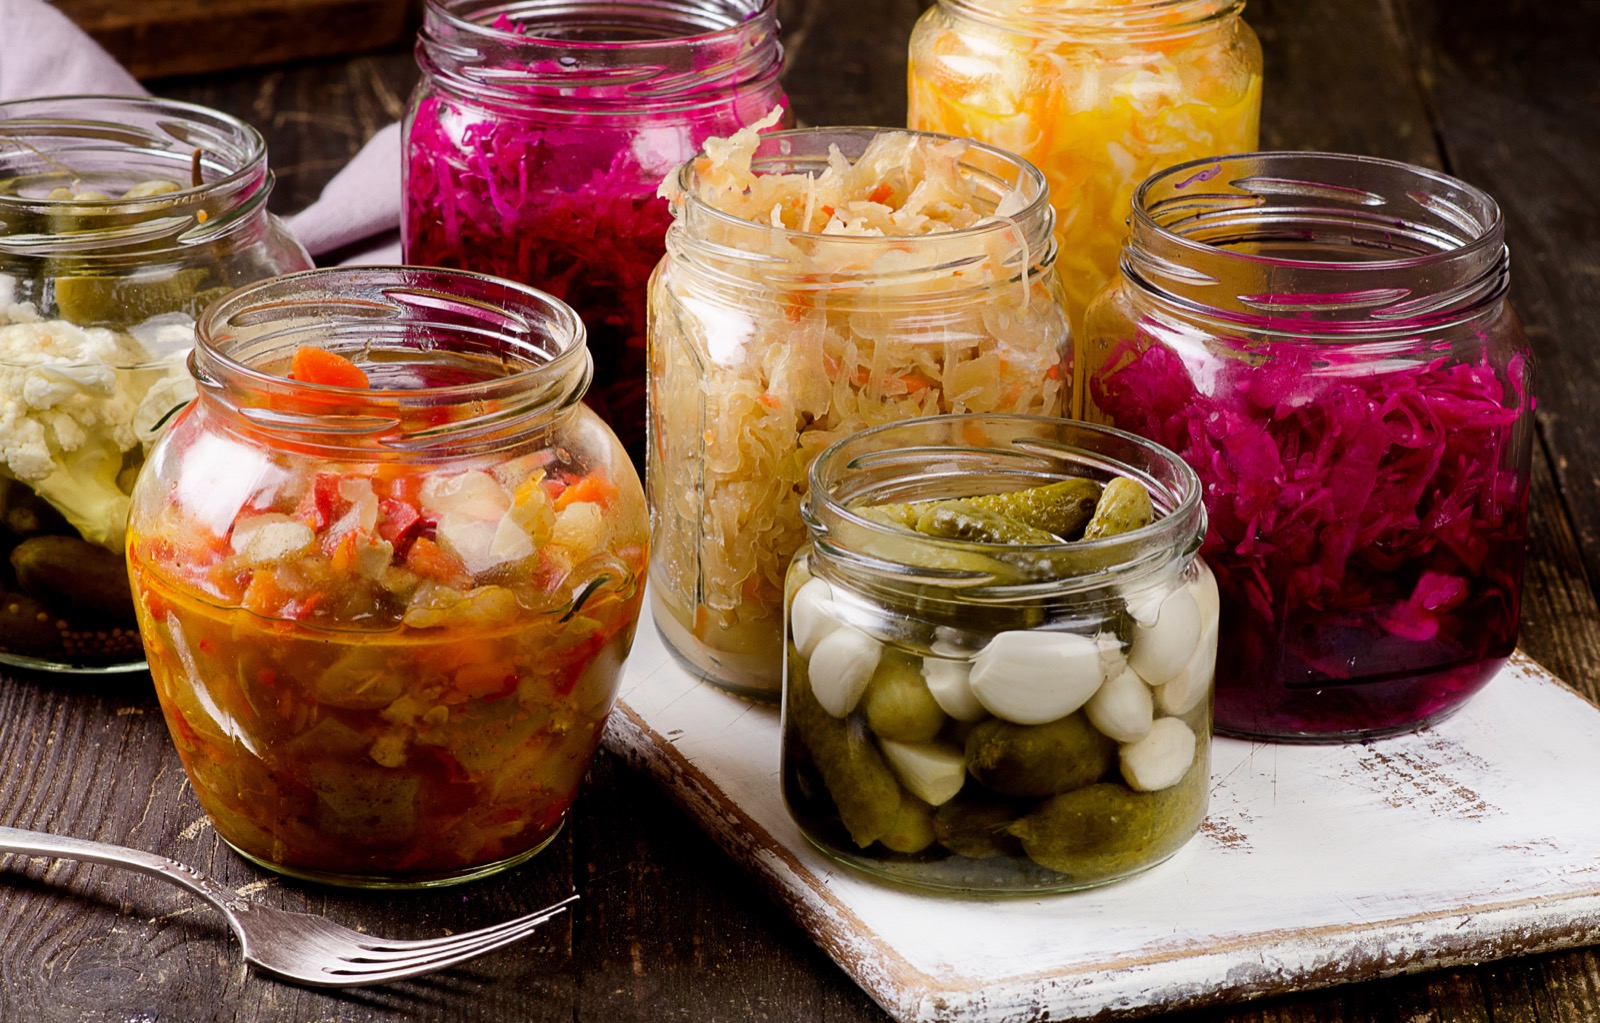 Open glass jars featuring fermented vegetables suck as pickles, kimchee, and sauerkraut.